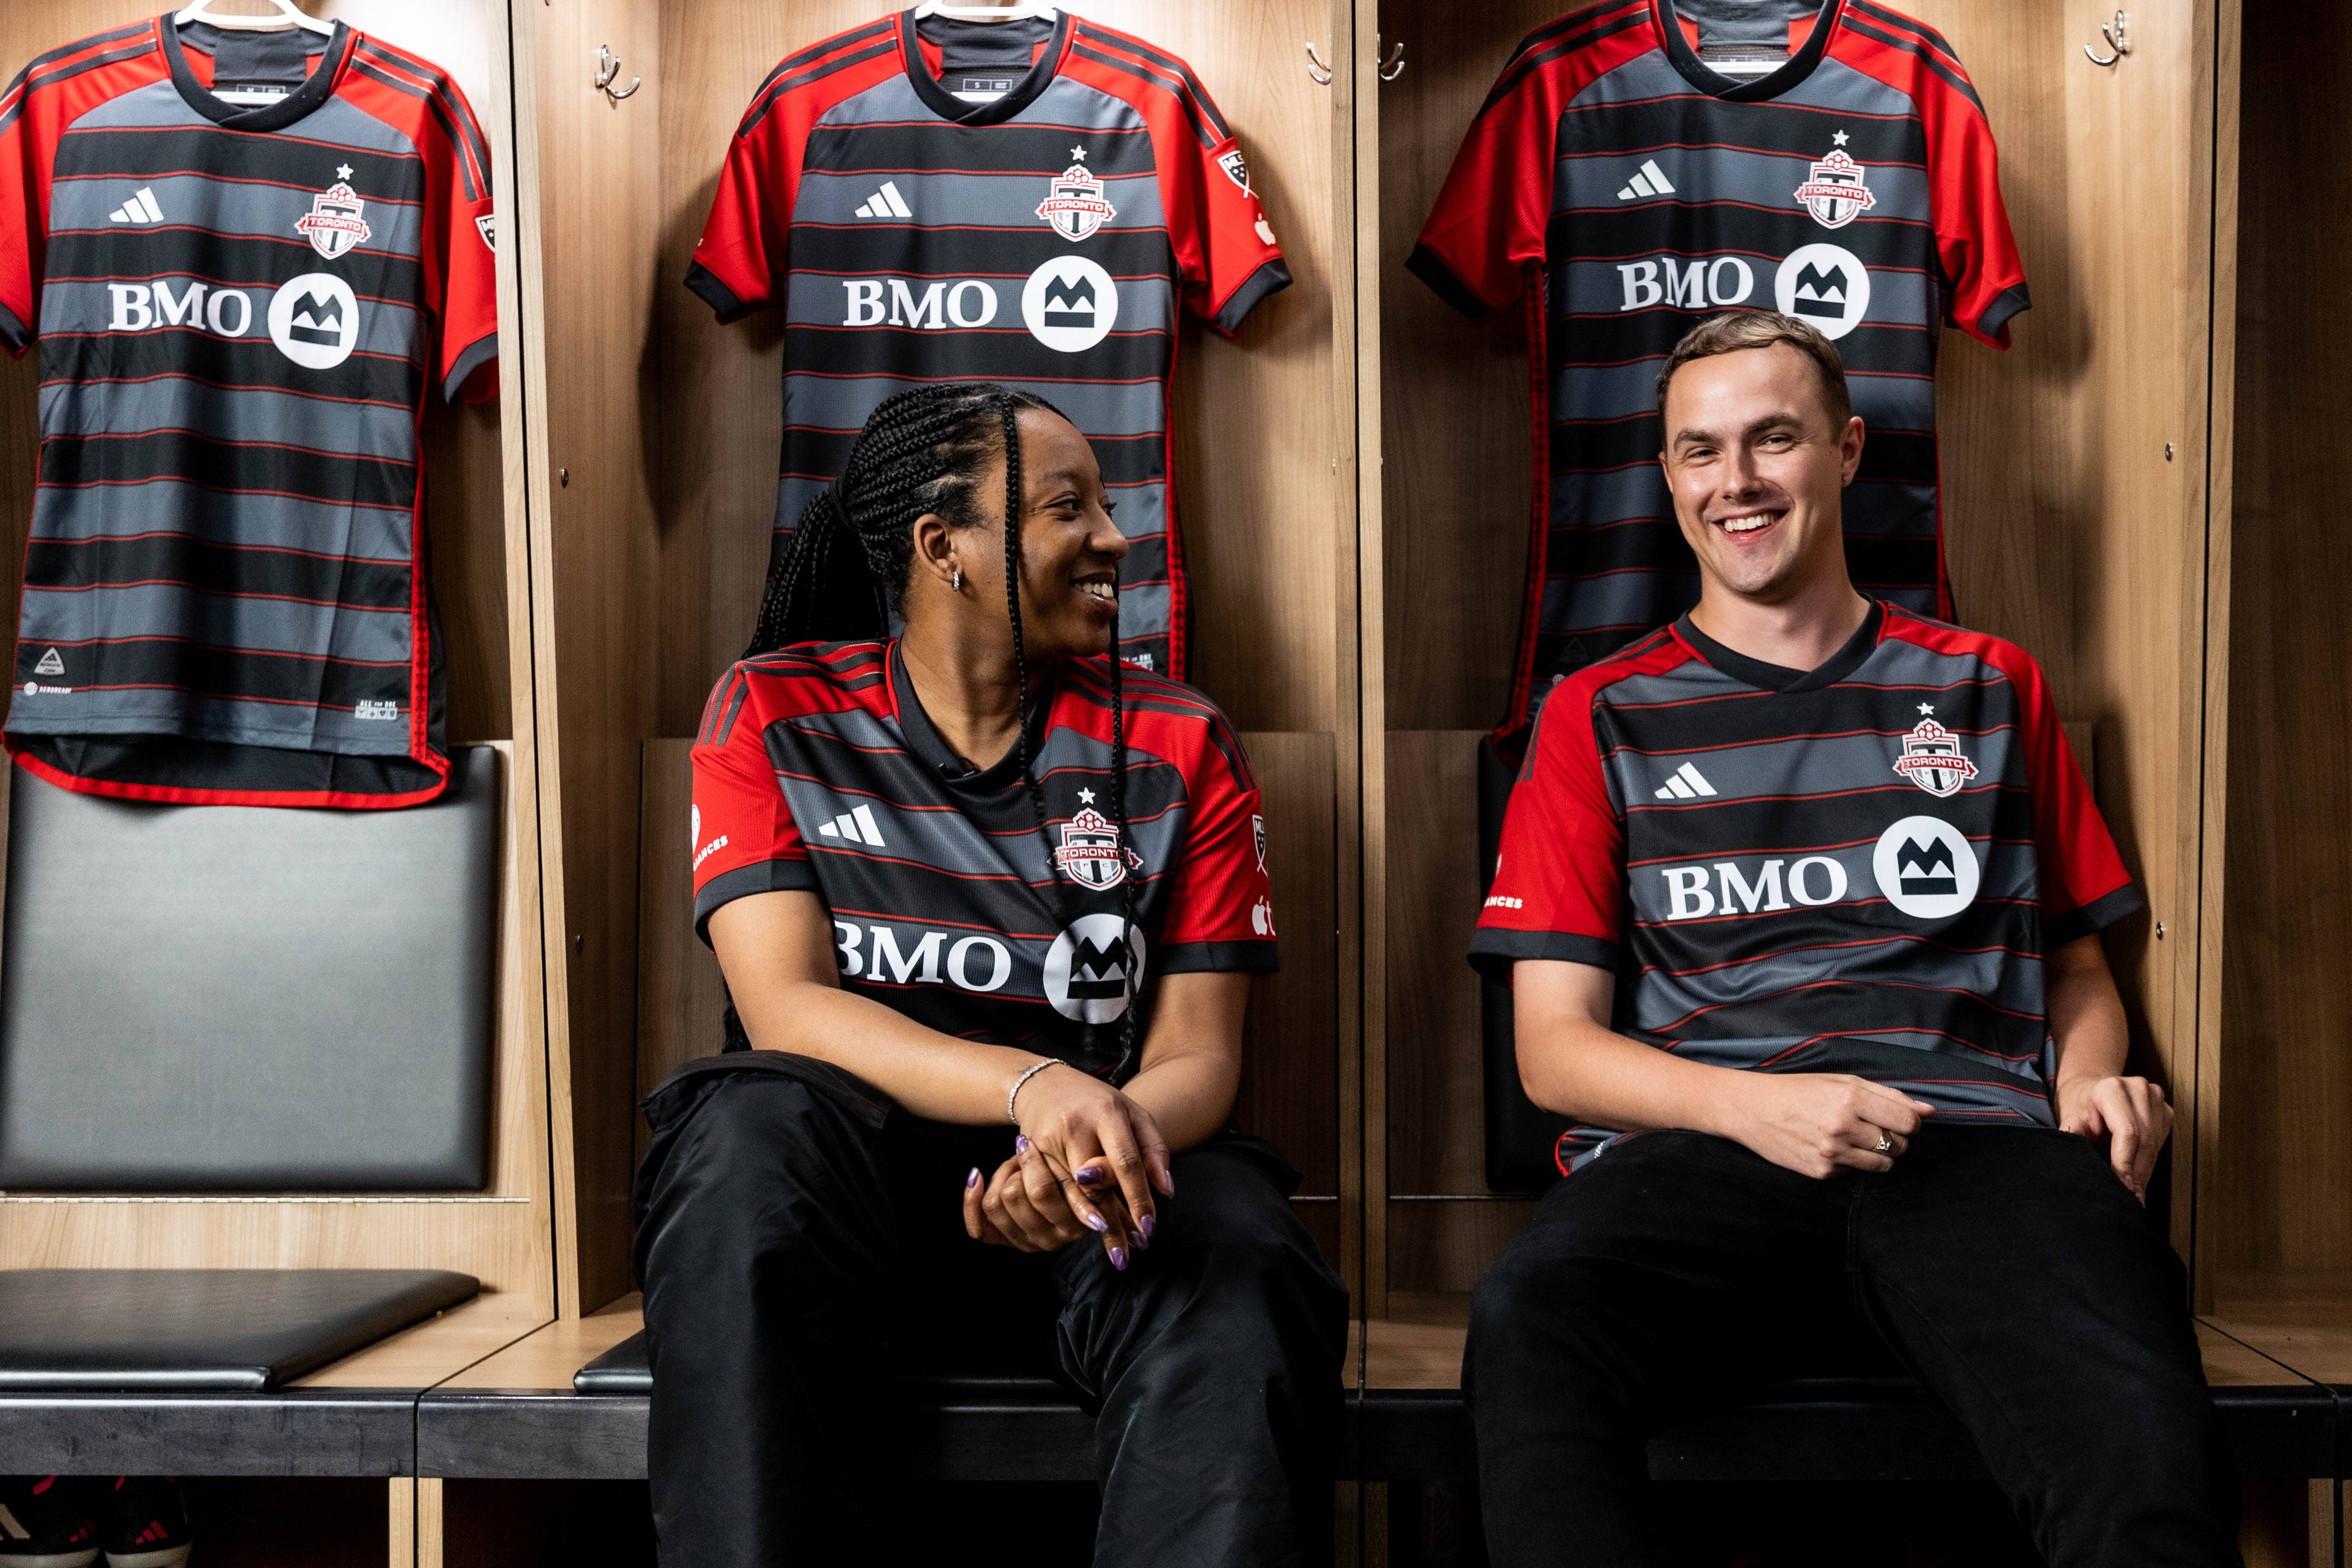 Toronto FC and FC London Announce Partnership